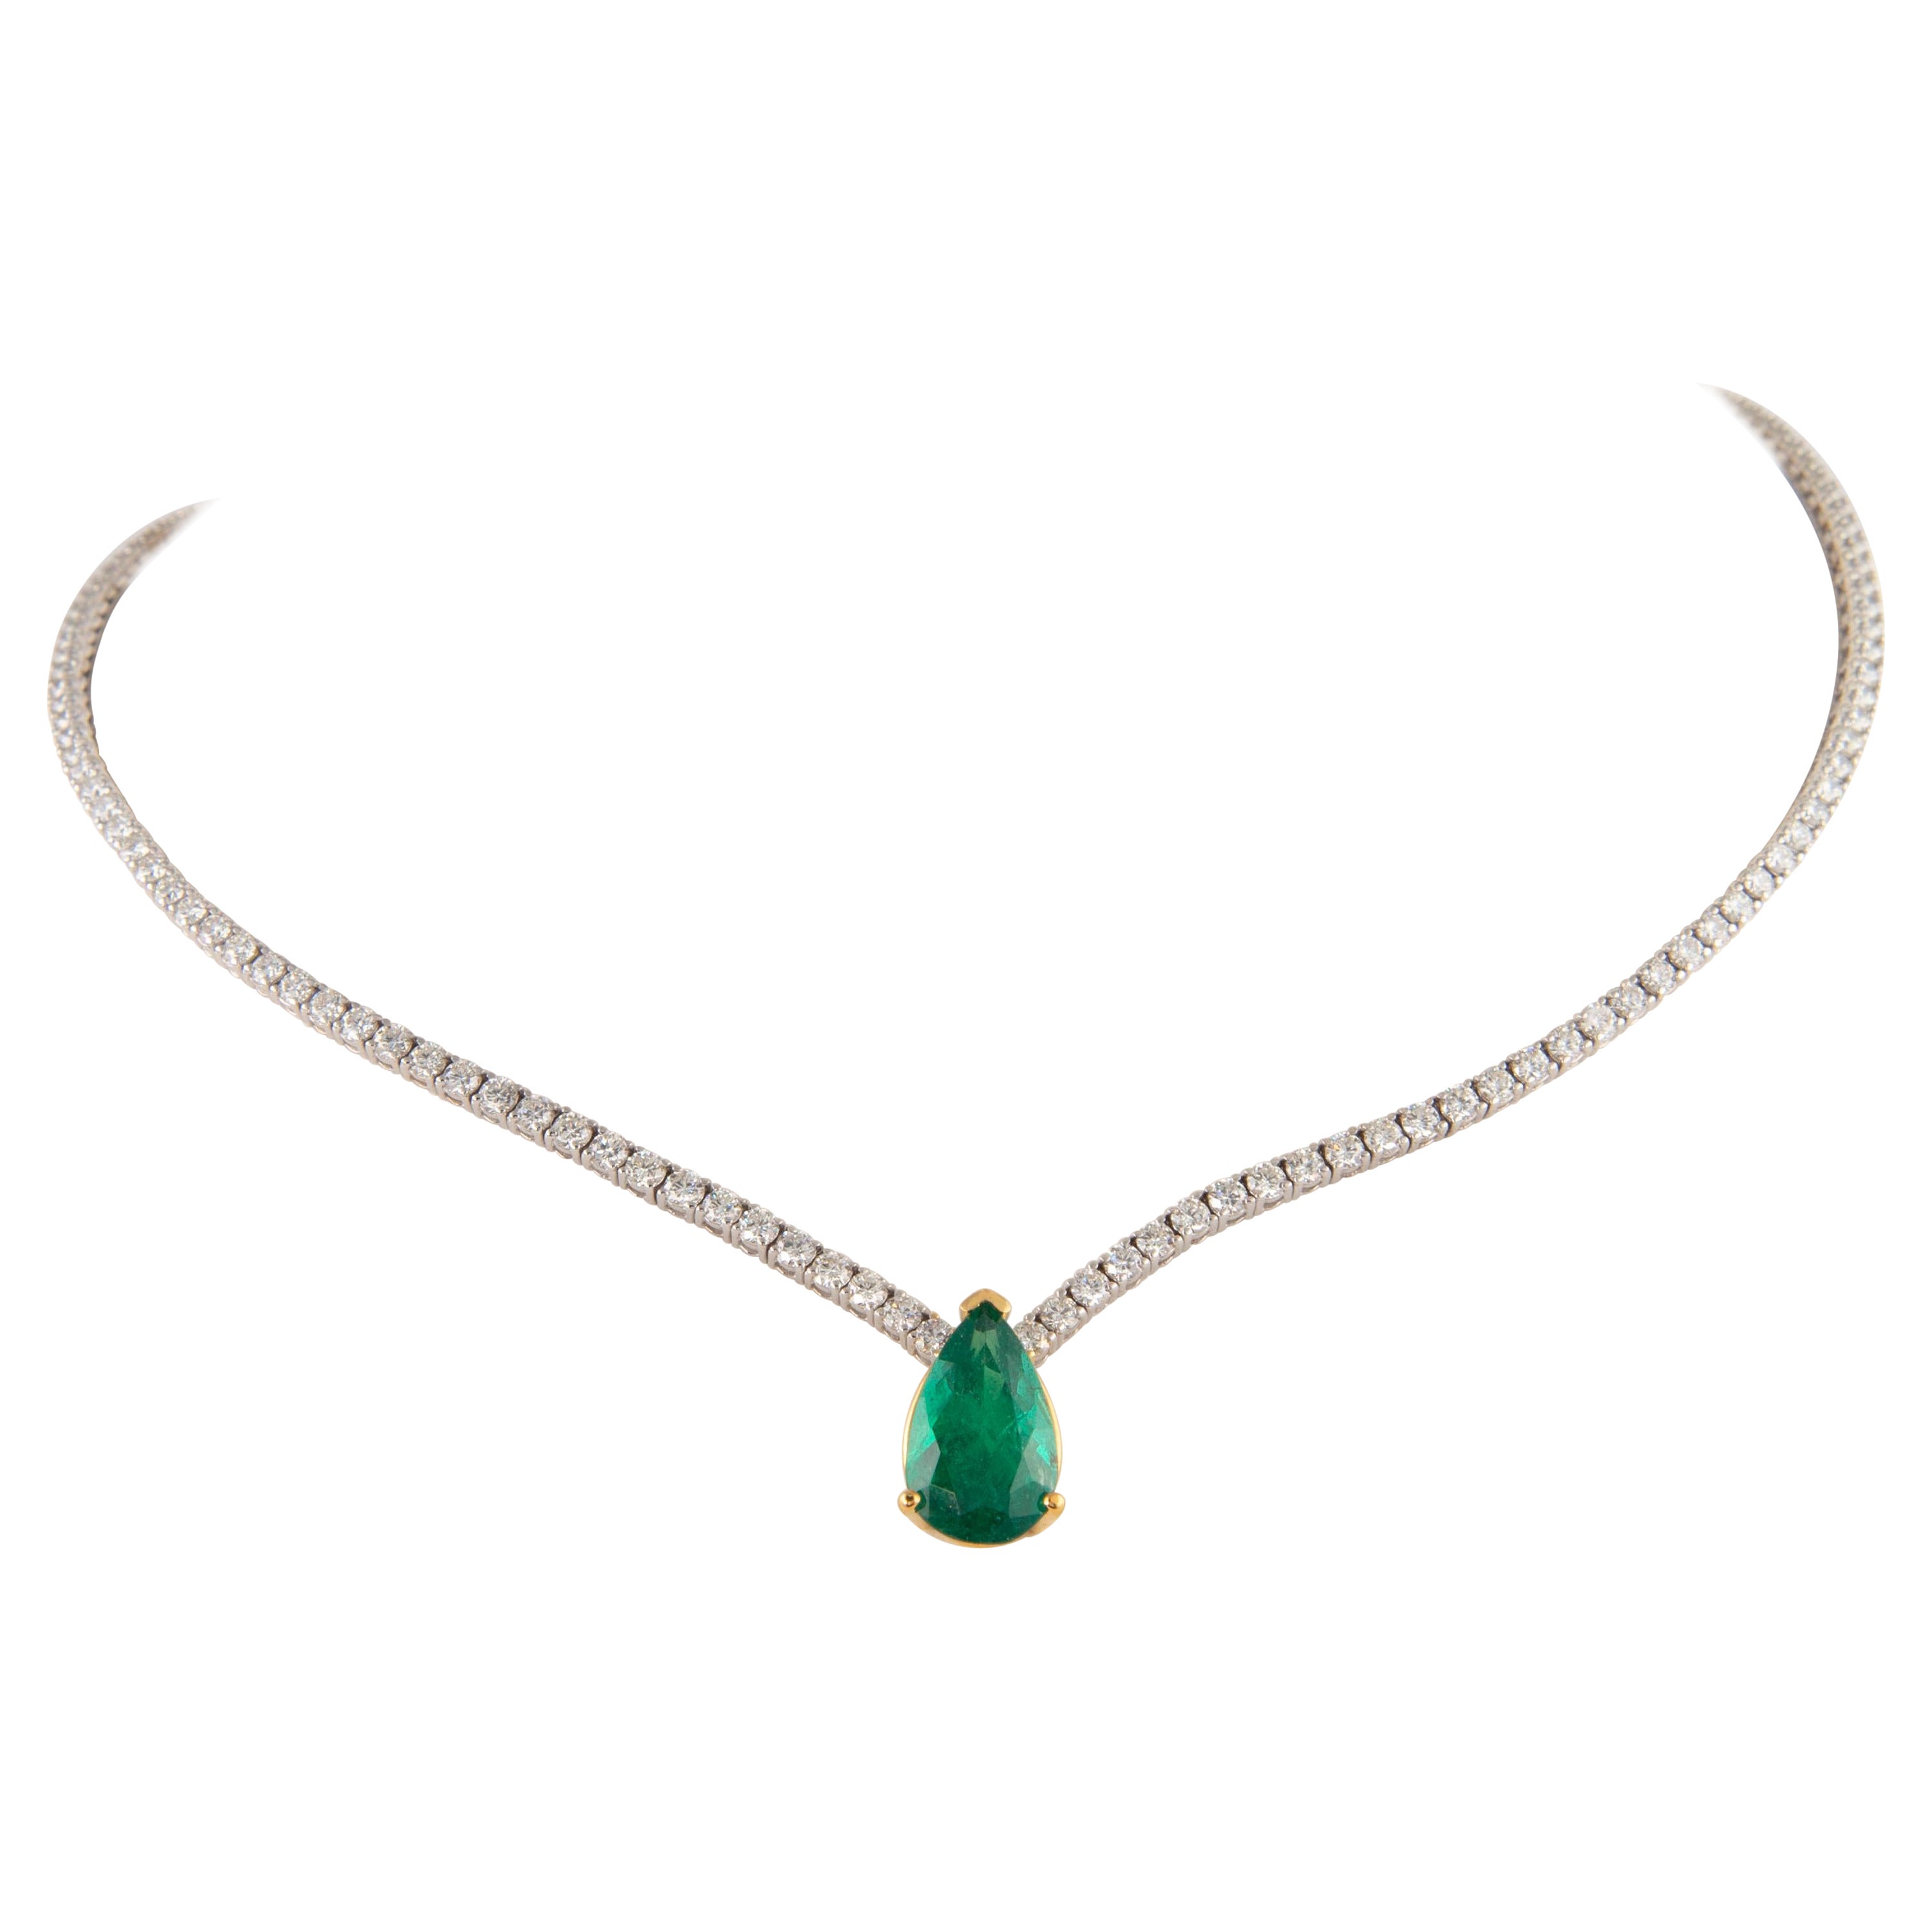 Alexander 13.46ct Emerald & Diamond Tennis Necklace 18k Gold